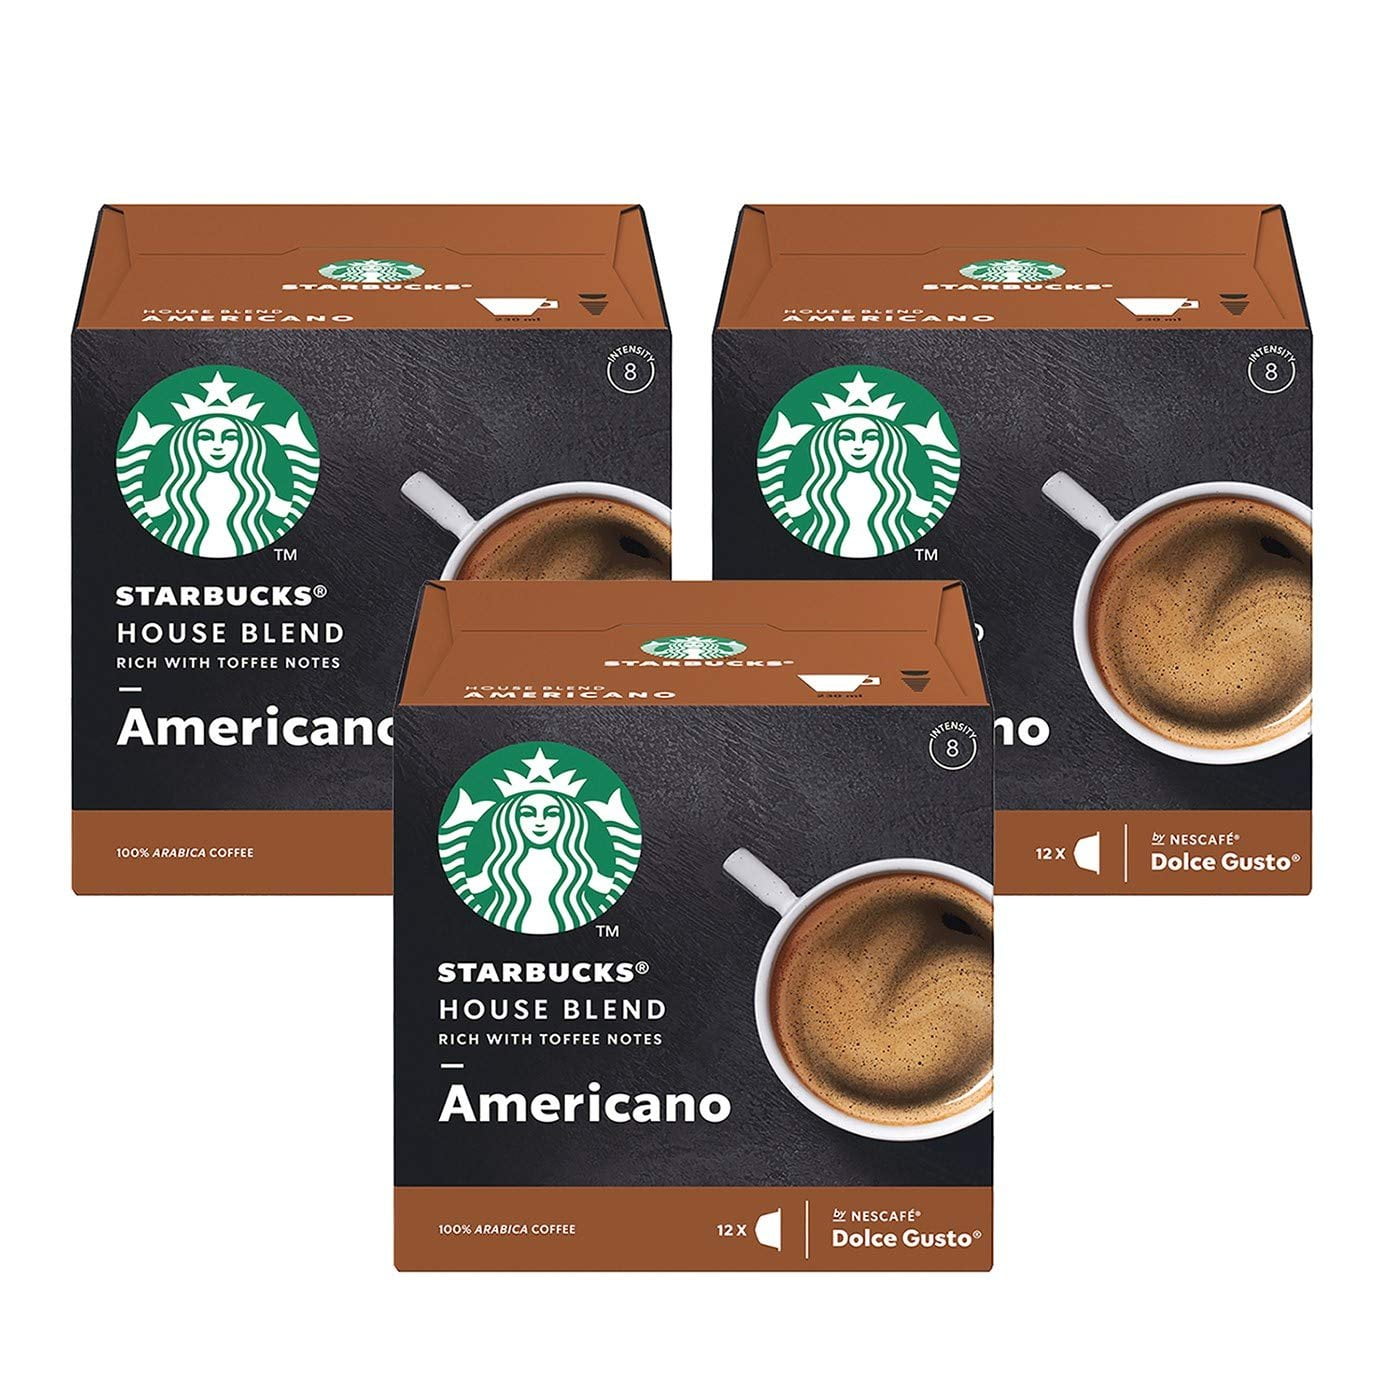 Dosette Neo Dolce Gusto® Starbucks - Breakfast Americano x12